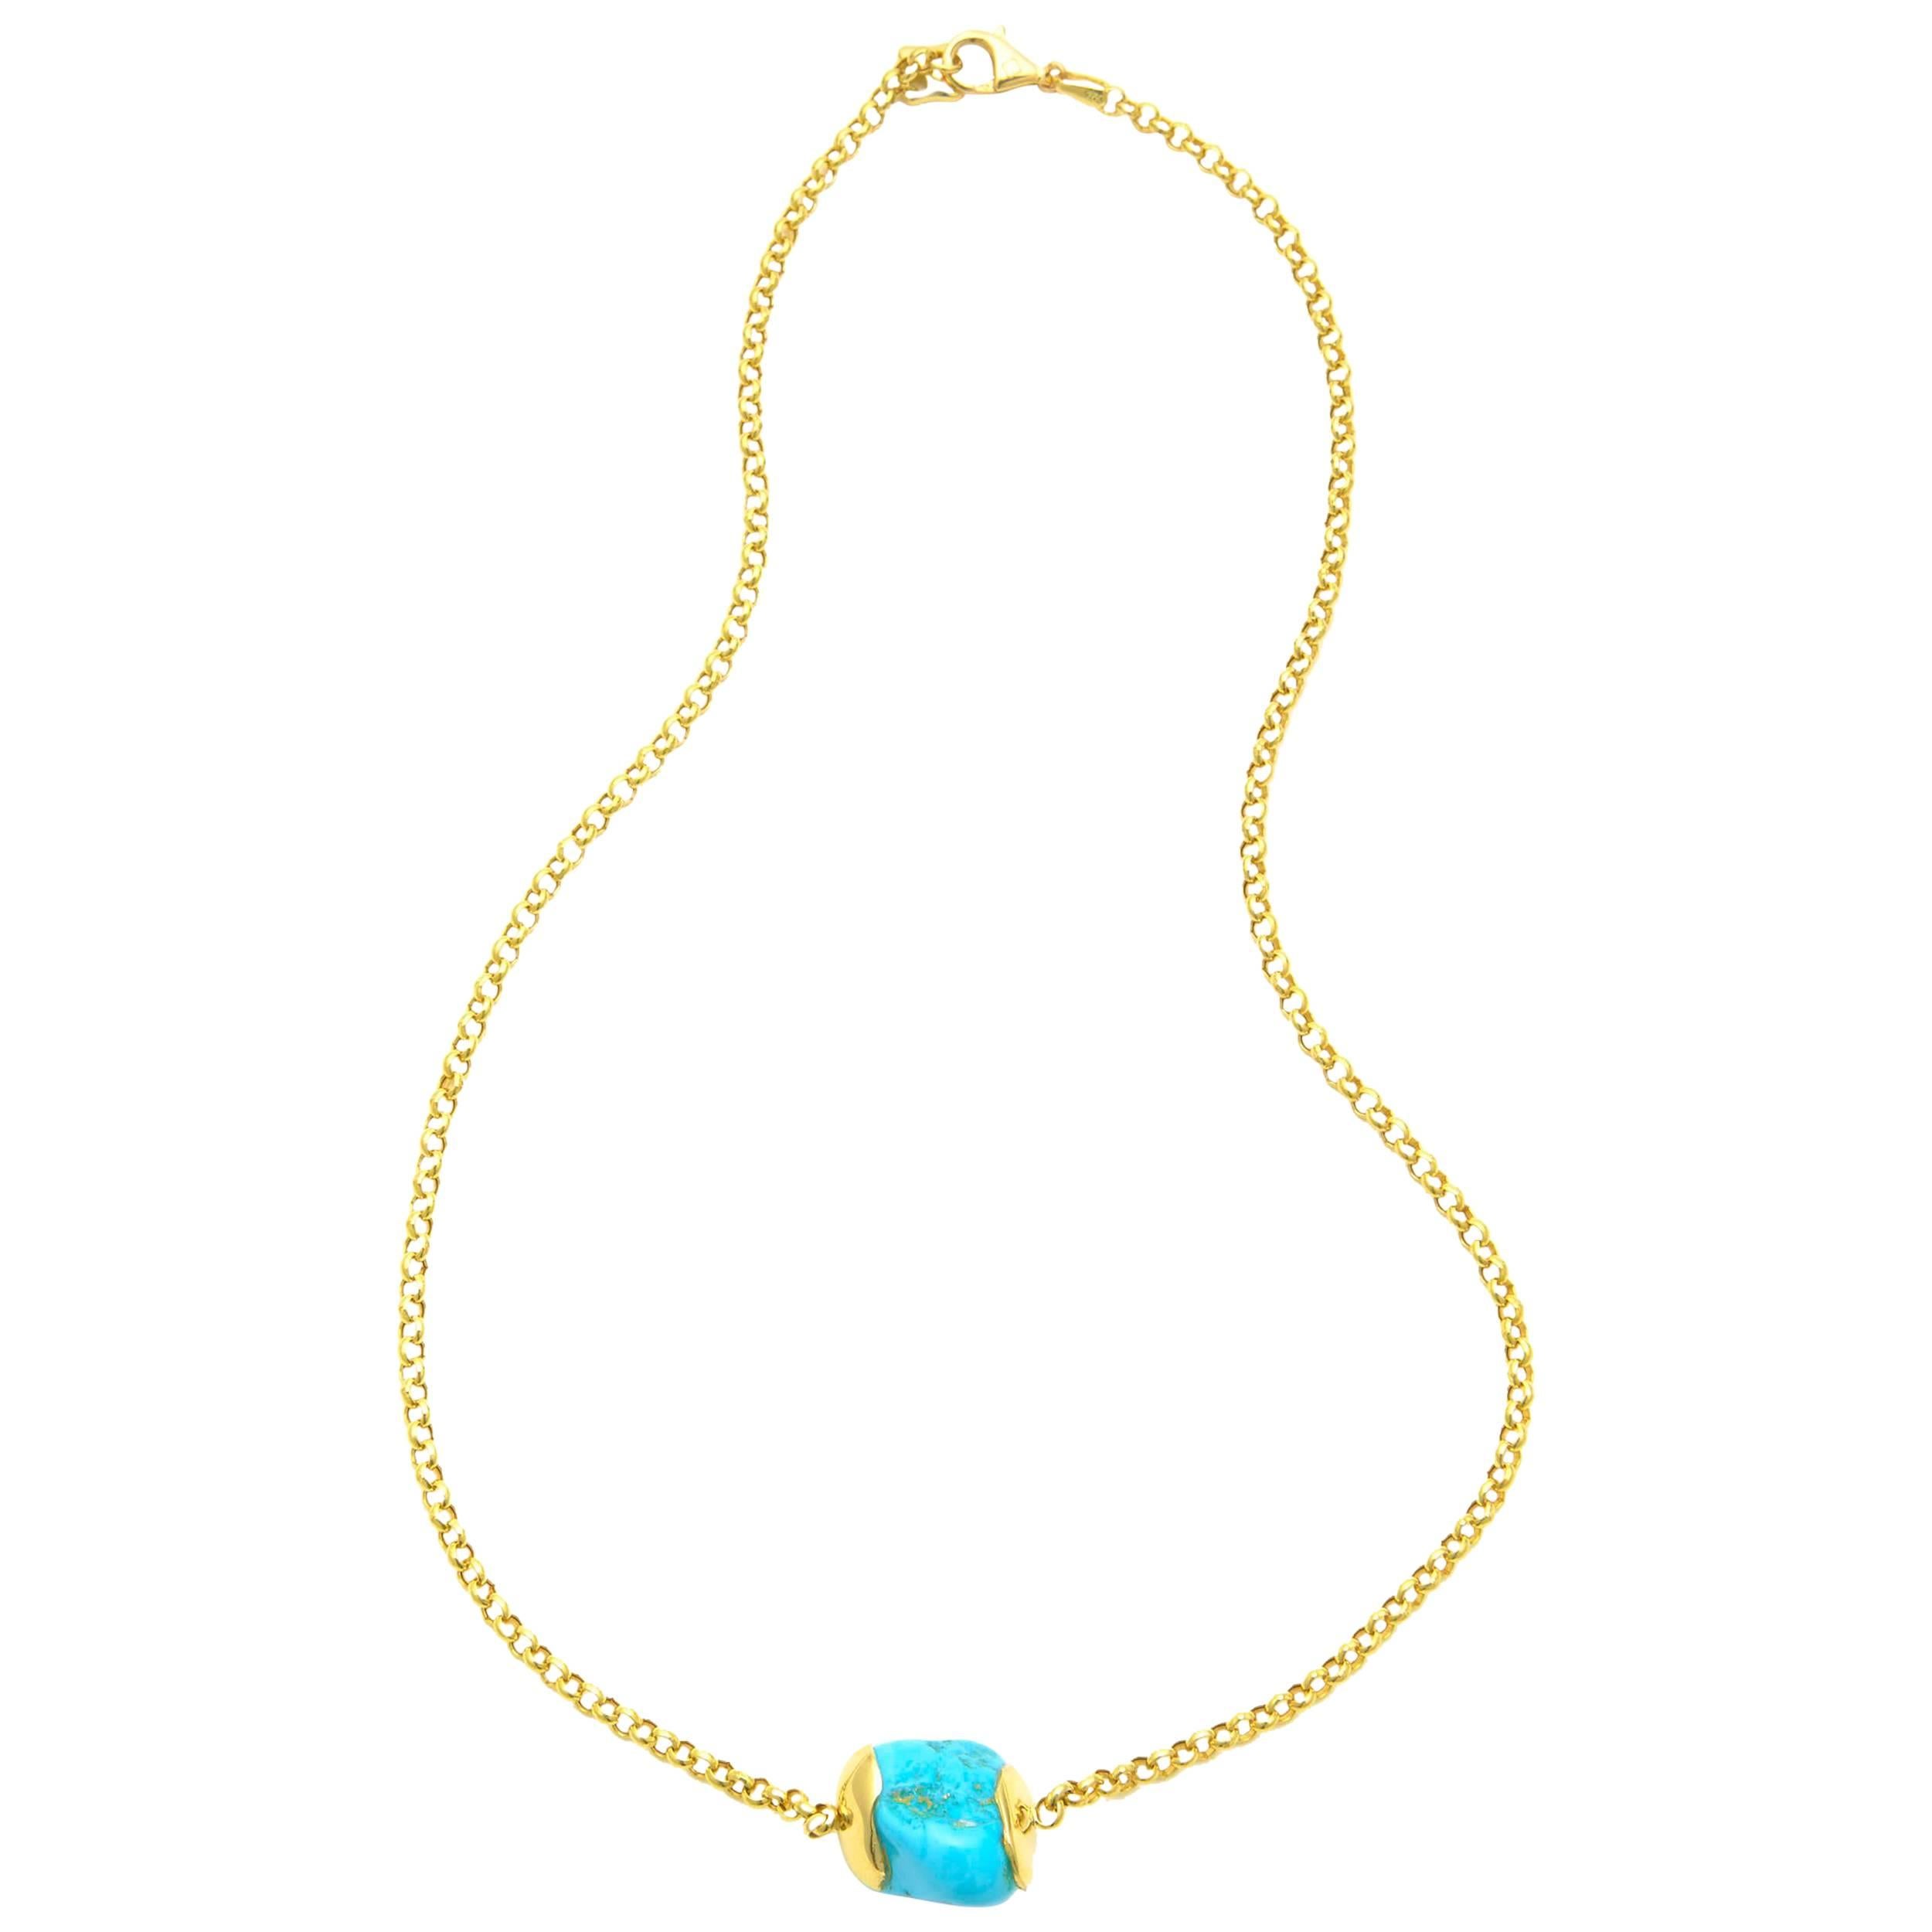 MAVIADA's Tumbled Turquoise Series, 18 Karat Gold Necklace, 40 cm